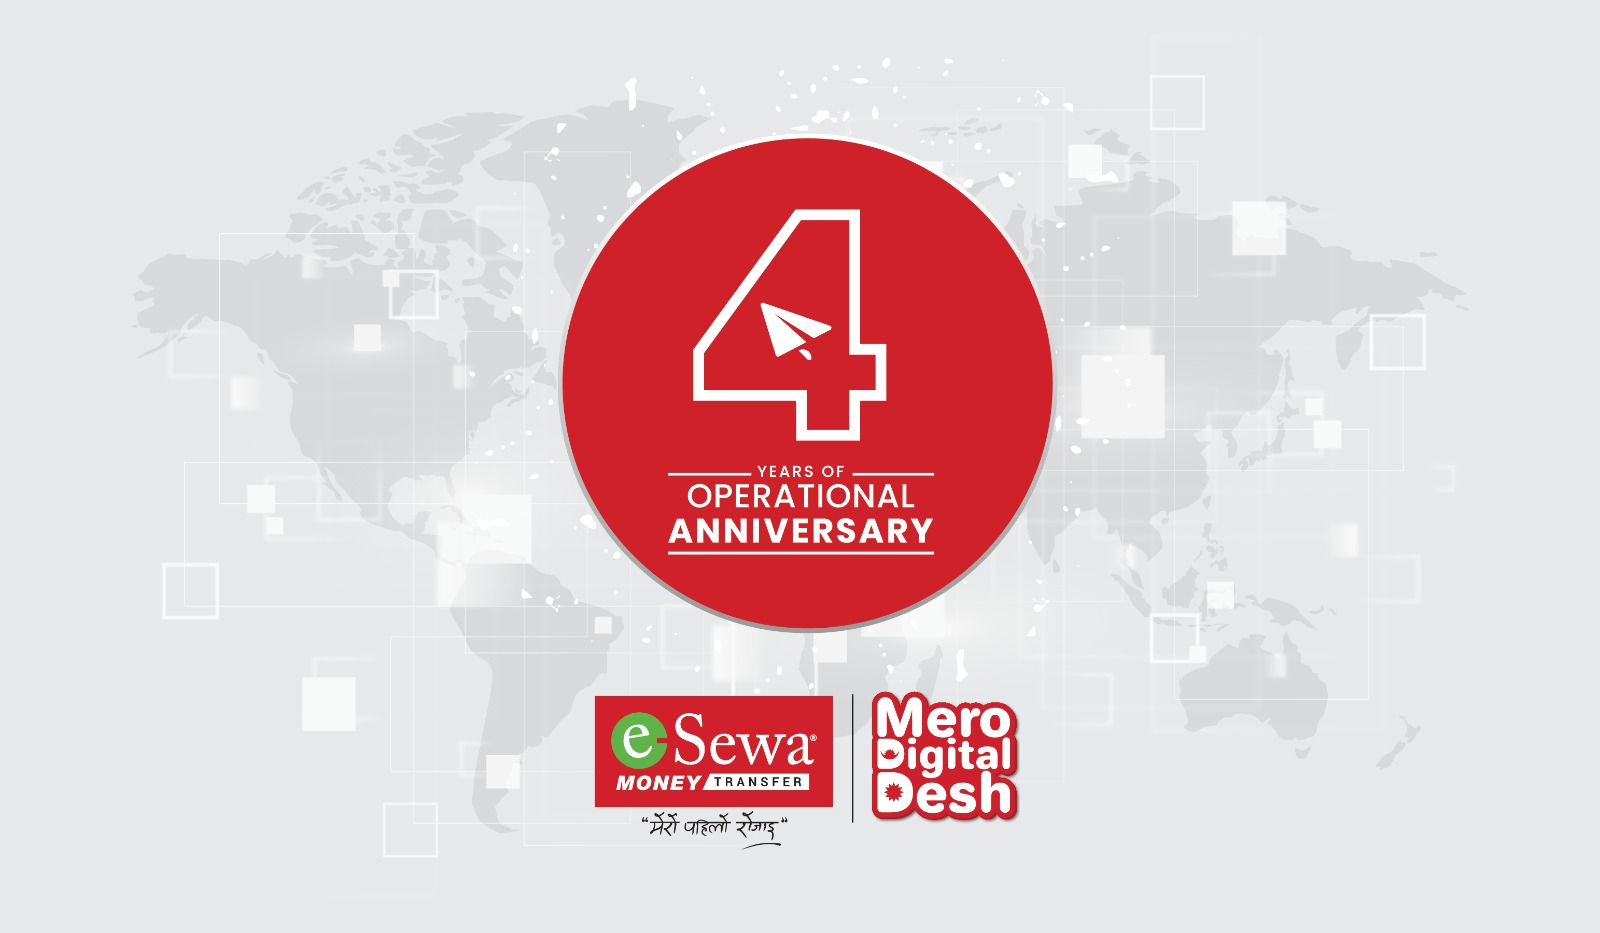 eSewa Money Transfer celebrates its 4th operational anniversary